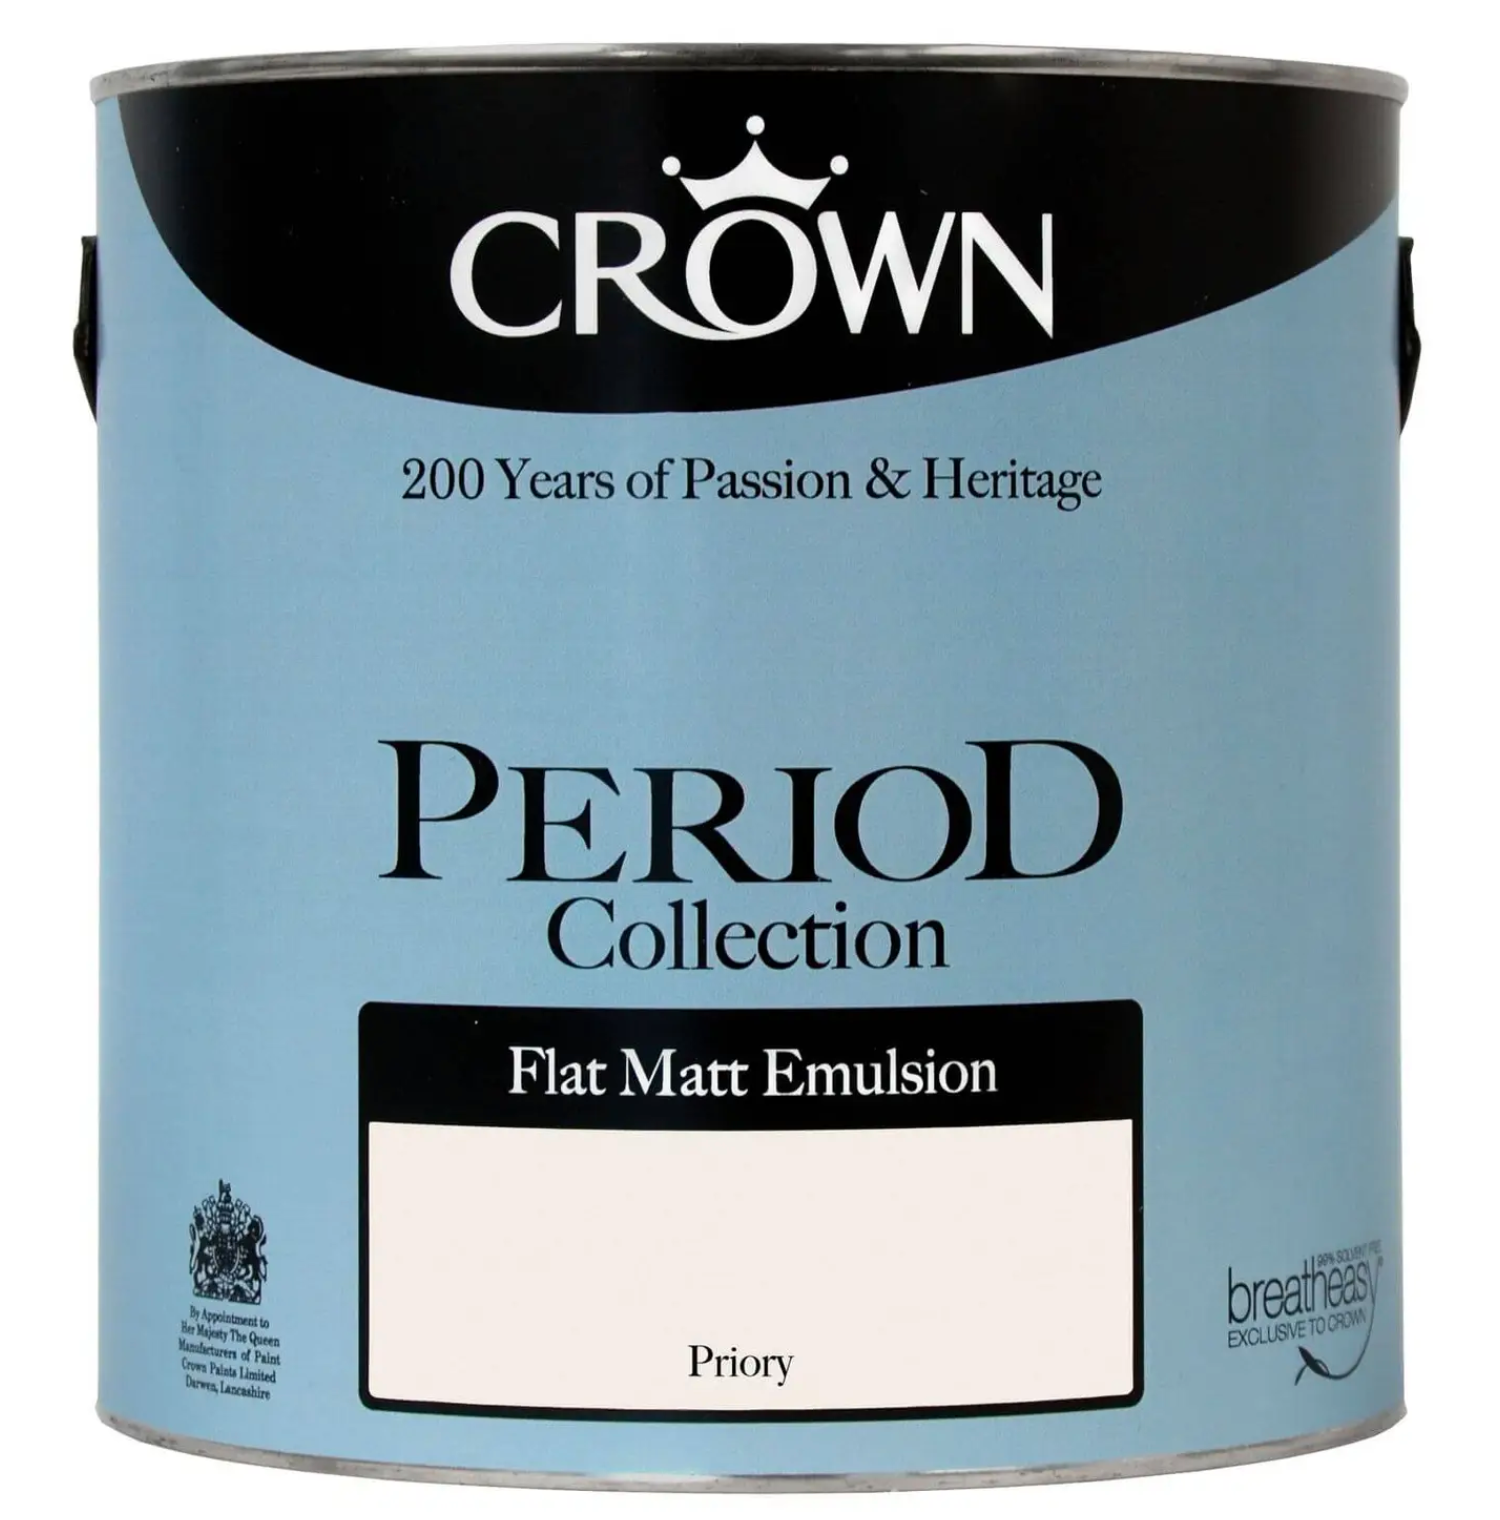 Crown Period Collection Flat Matt Emulsion - Priory